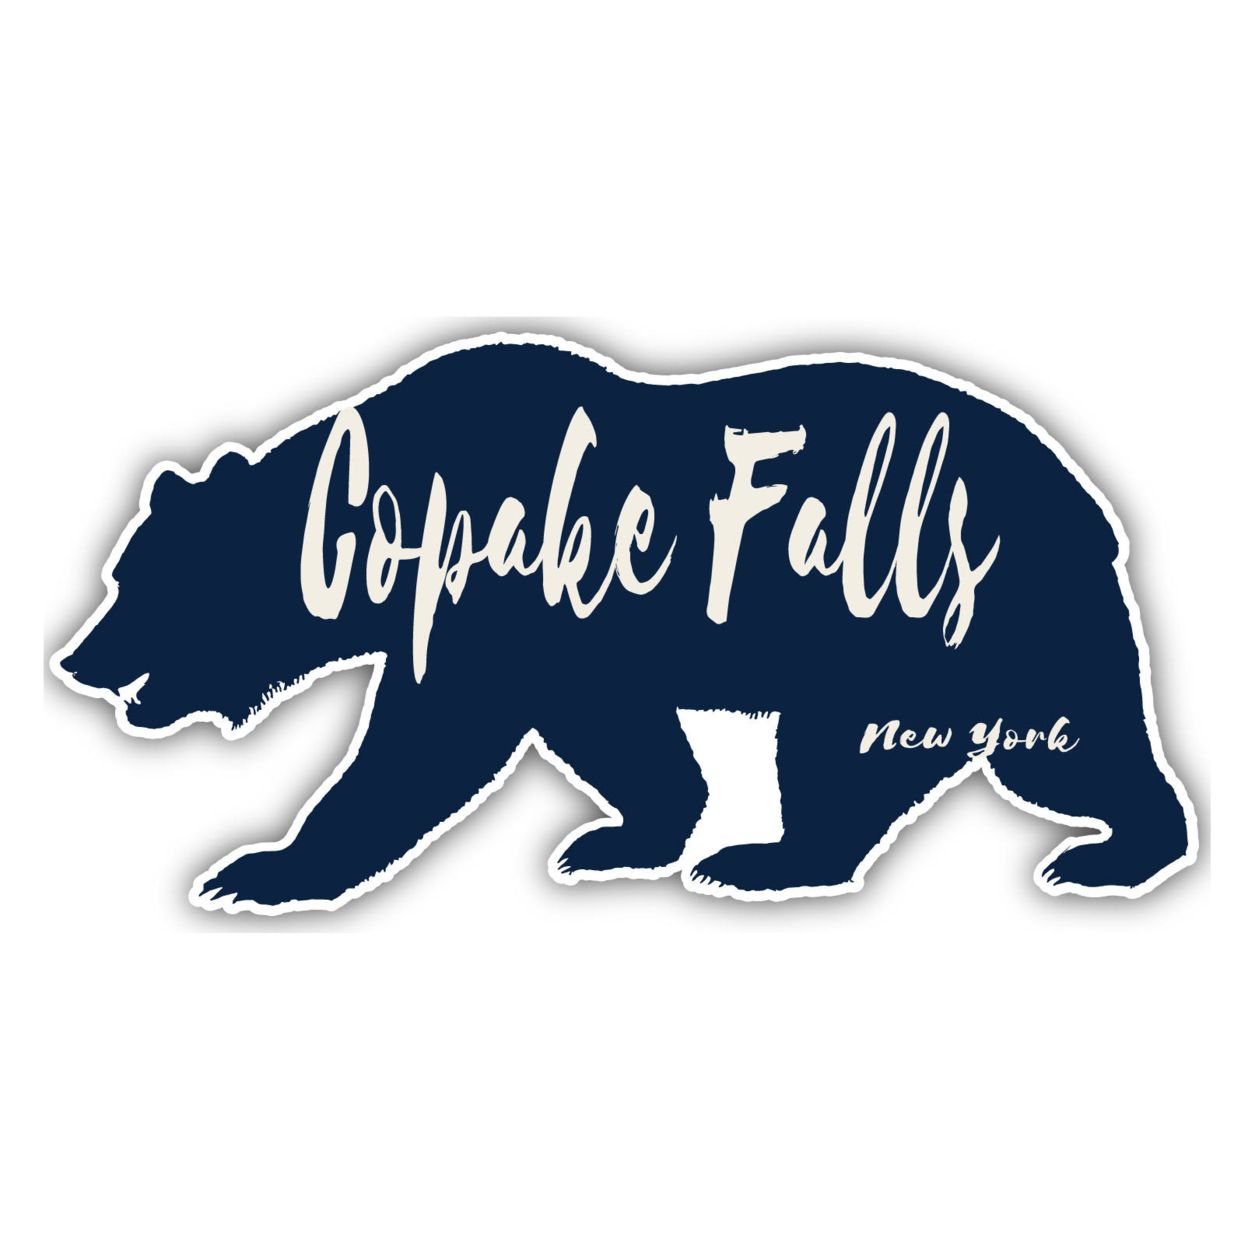 Copake Falls New York Souvenir Decorative Stickers (Choose Theme And Size) - Single Unit, 10-Inch, Bear